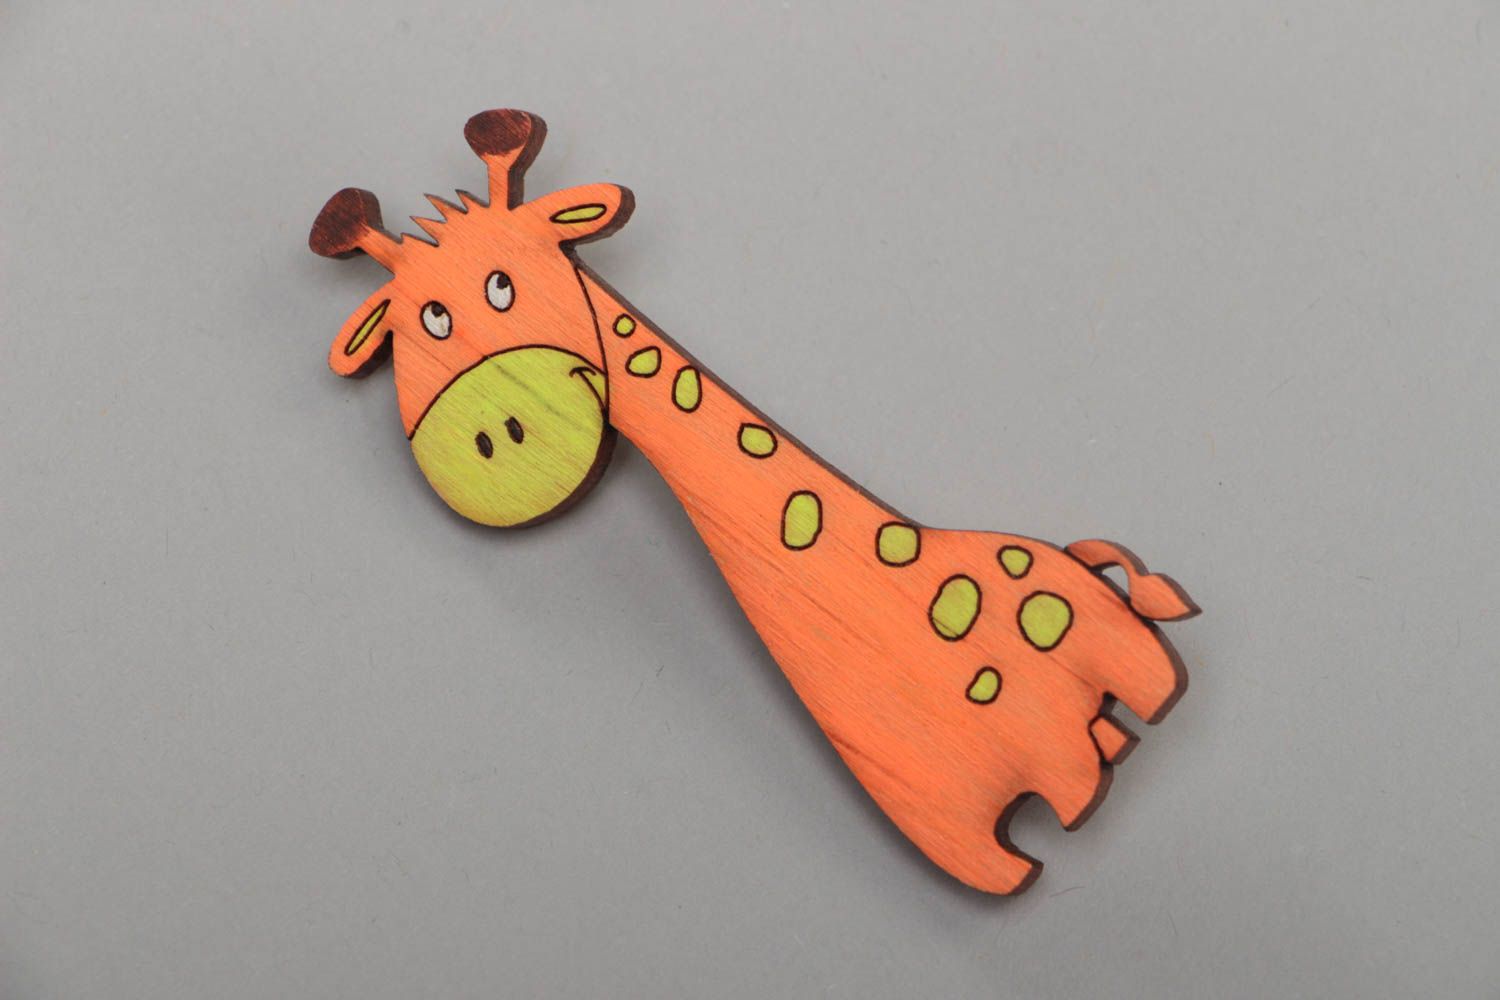 Broche en bois en forme de girafe peinte de couleurs acryliques faite main photo 2